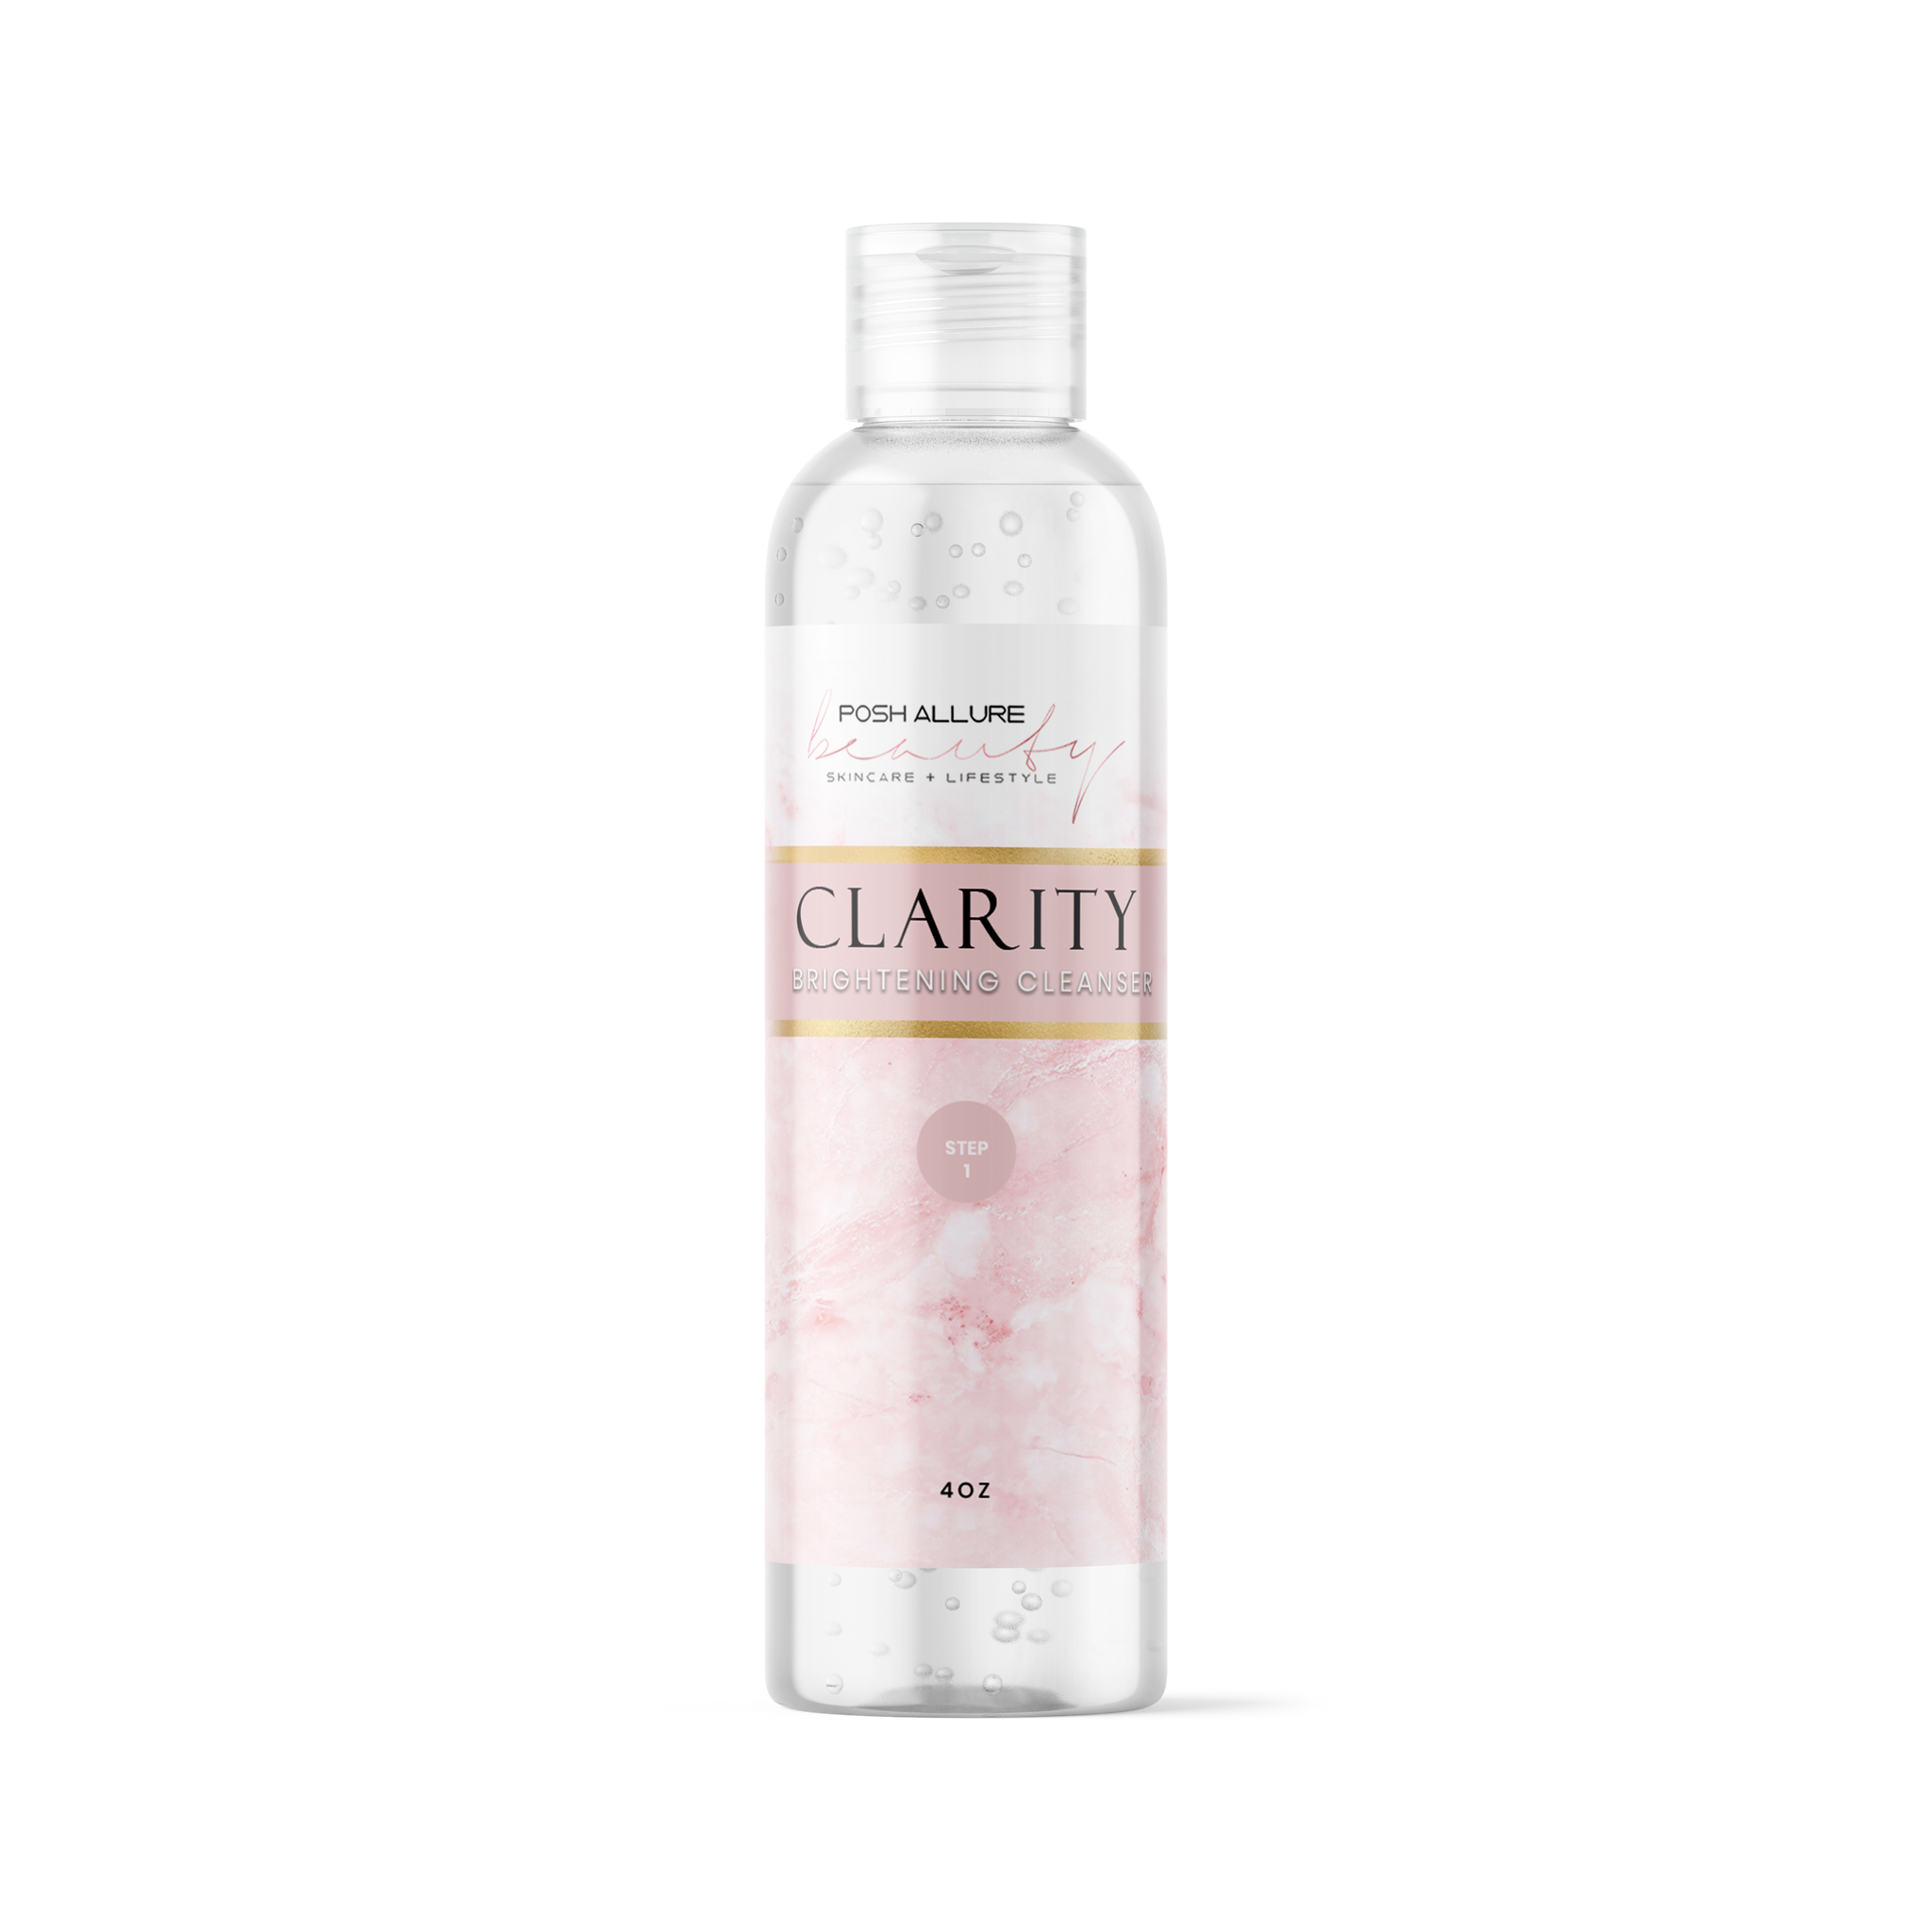 CLARITY Brightening Cleanser - Posh|Allure Beauty